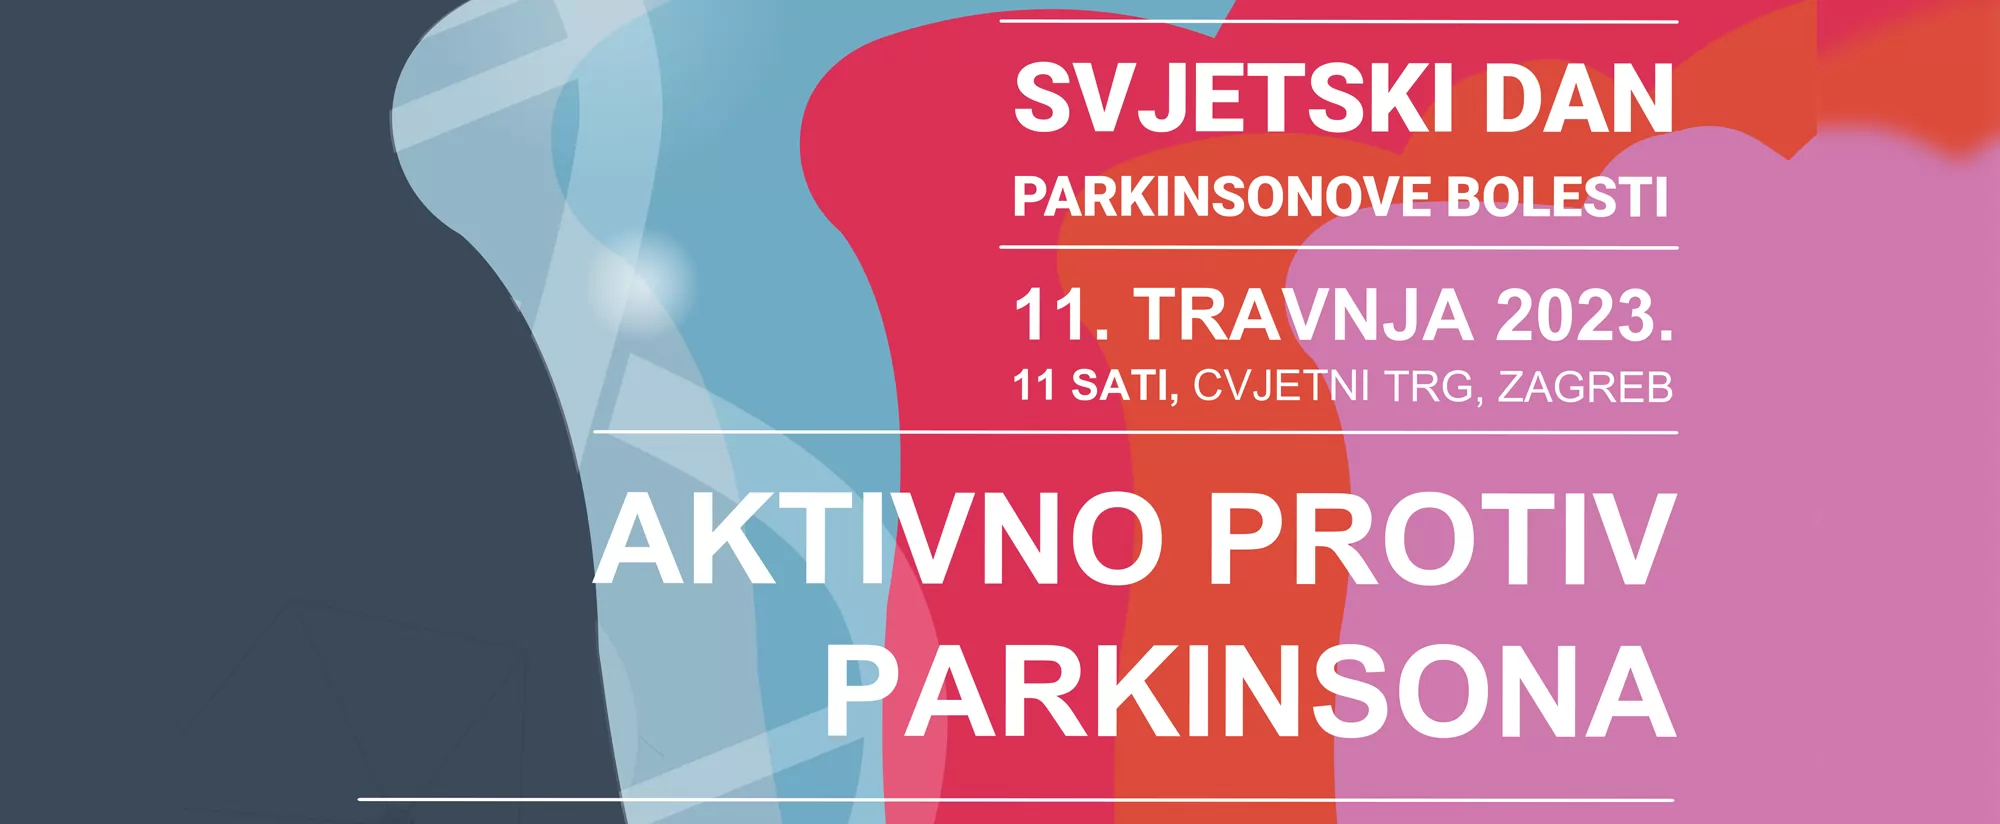 Aktivno protiv Parkinsona 11. travnja na Cvjetnom trgu u Zagrebu